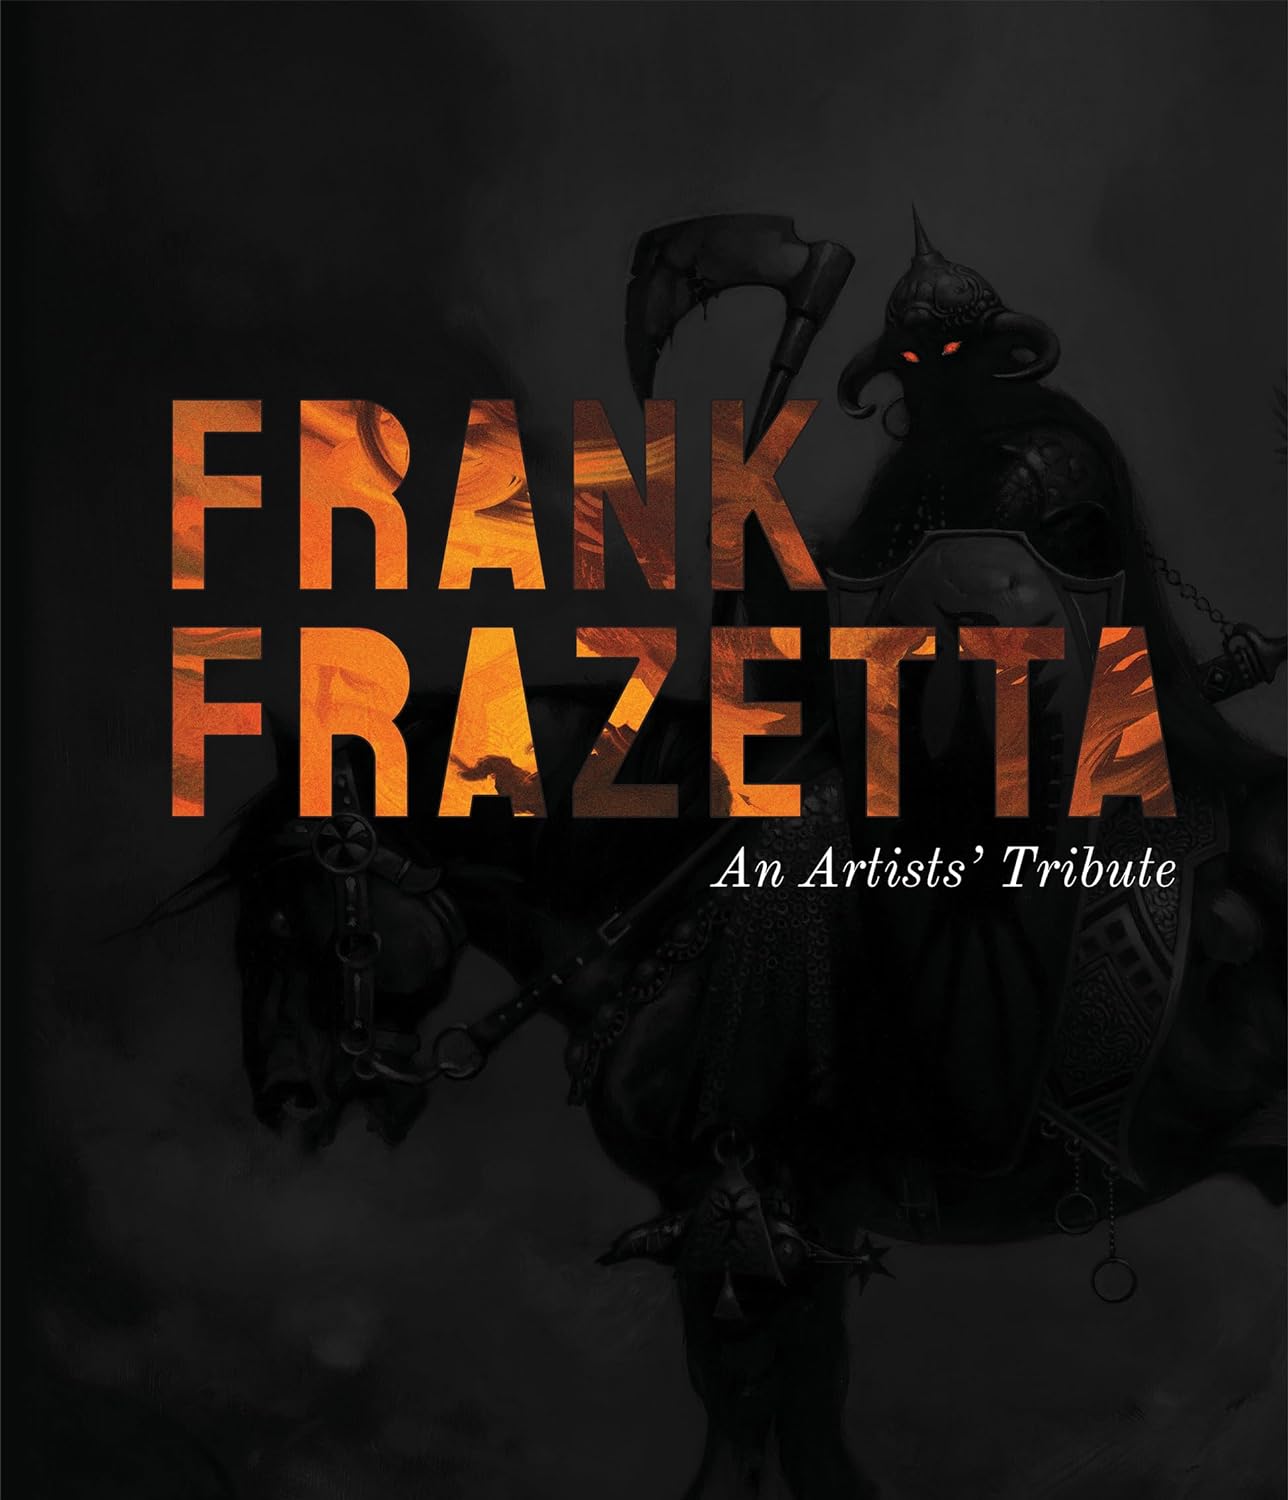 Frank Frazetta An Artists Tribute Hardcover